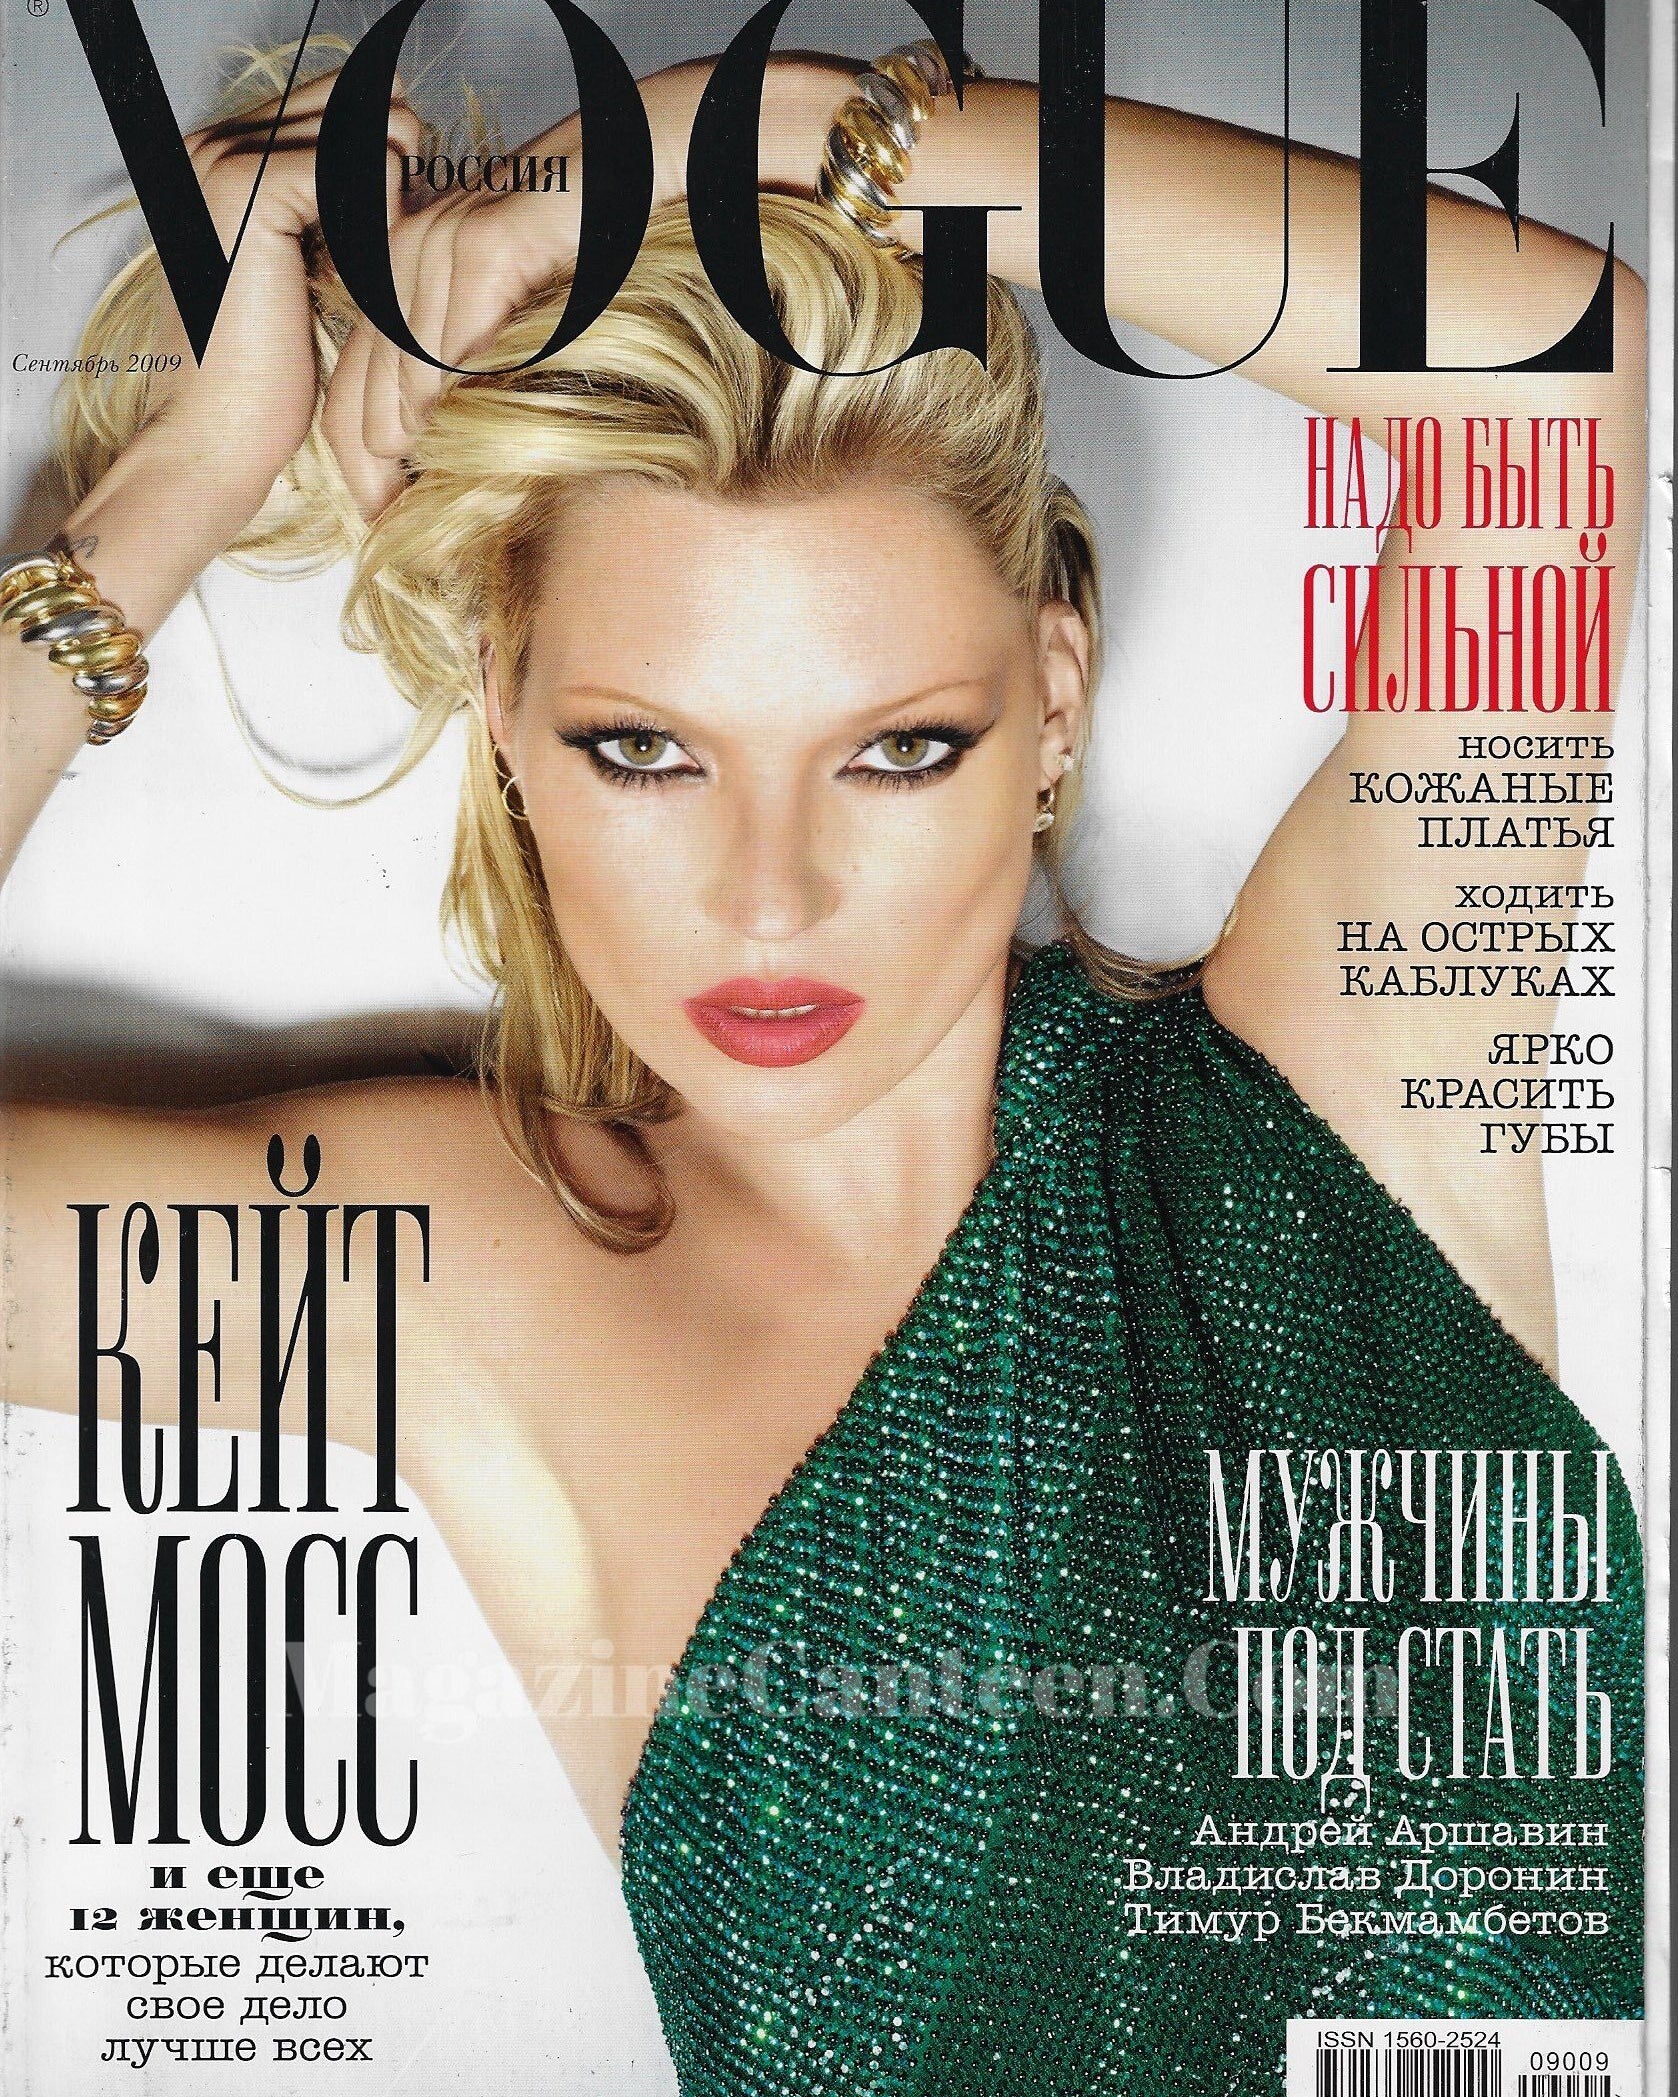 Vogue Russia Magazine 2009 - Kate Moss